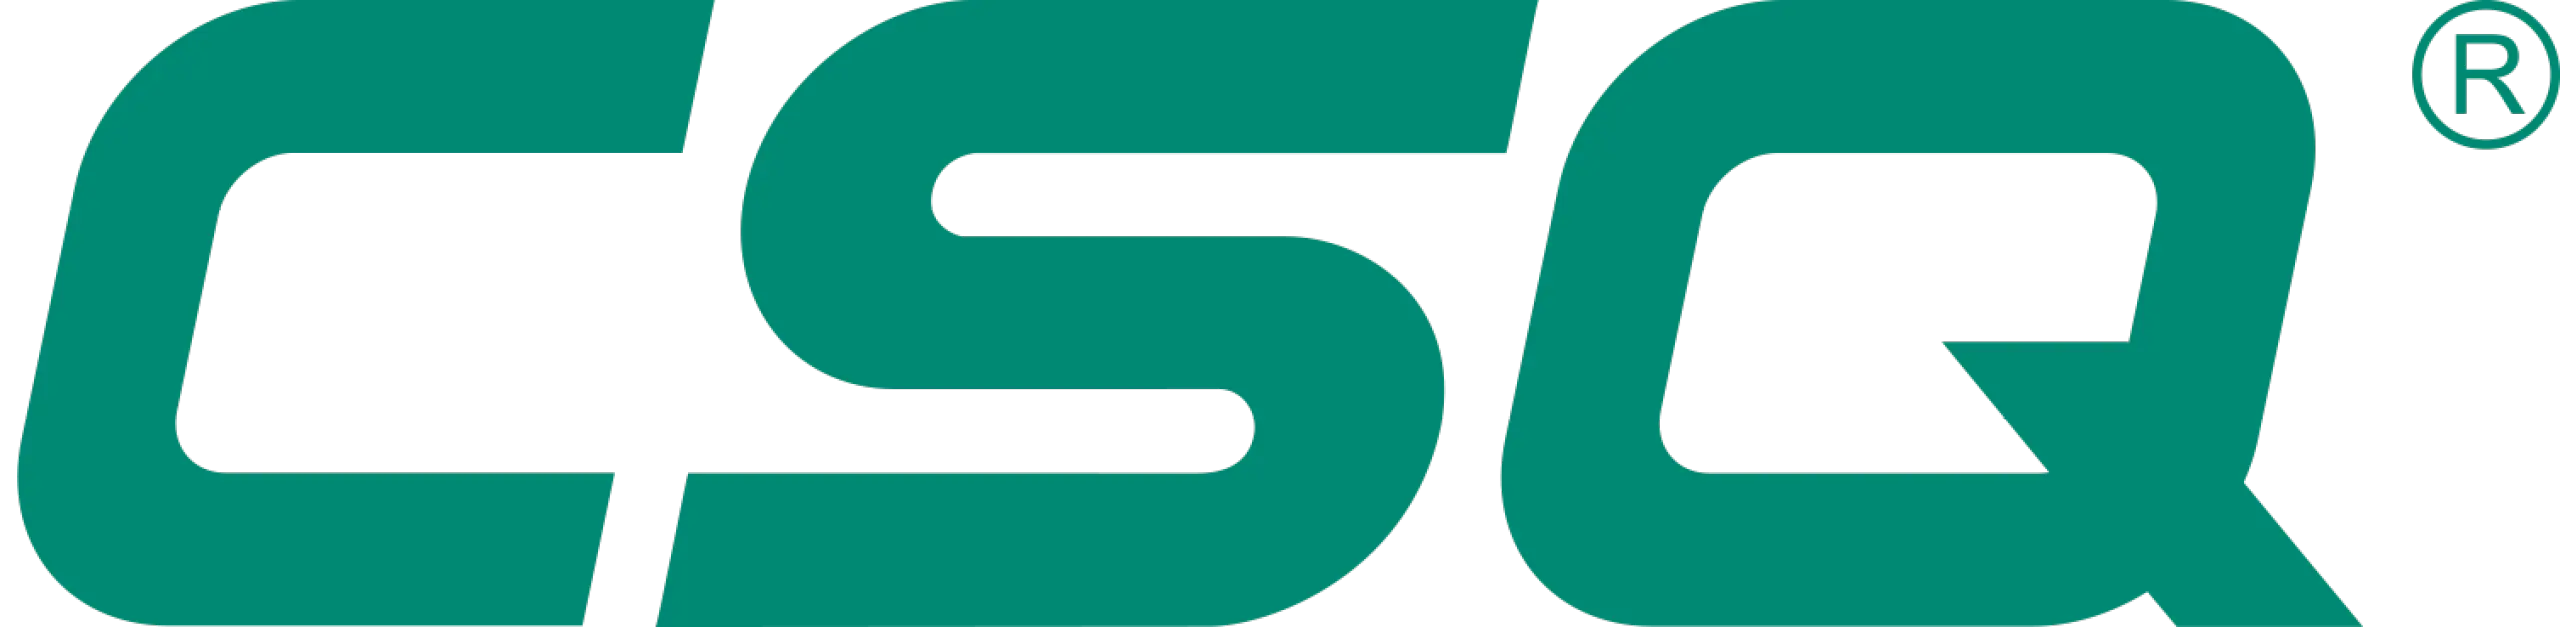 Siqi Technology Co., Ltd.